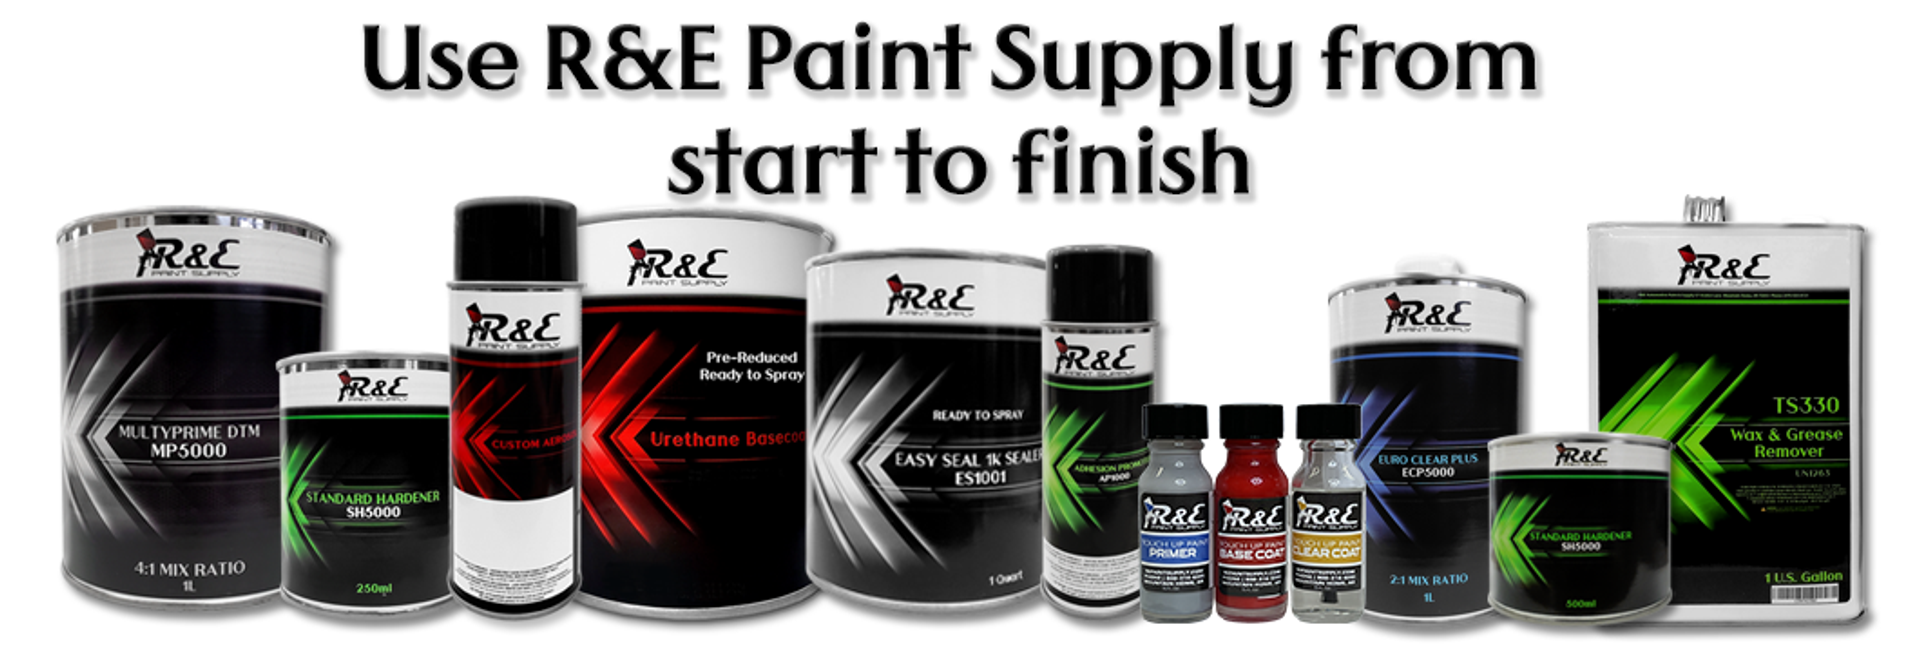 Paint & Supplies – Home Improvement Supply